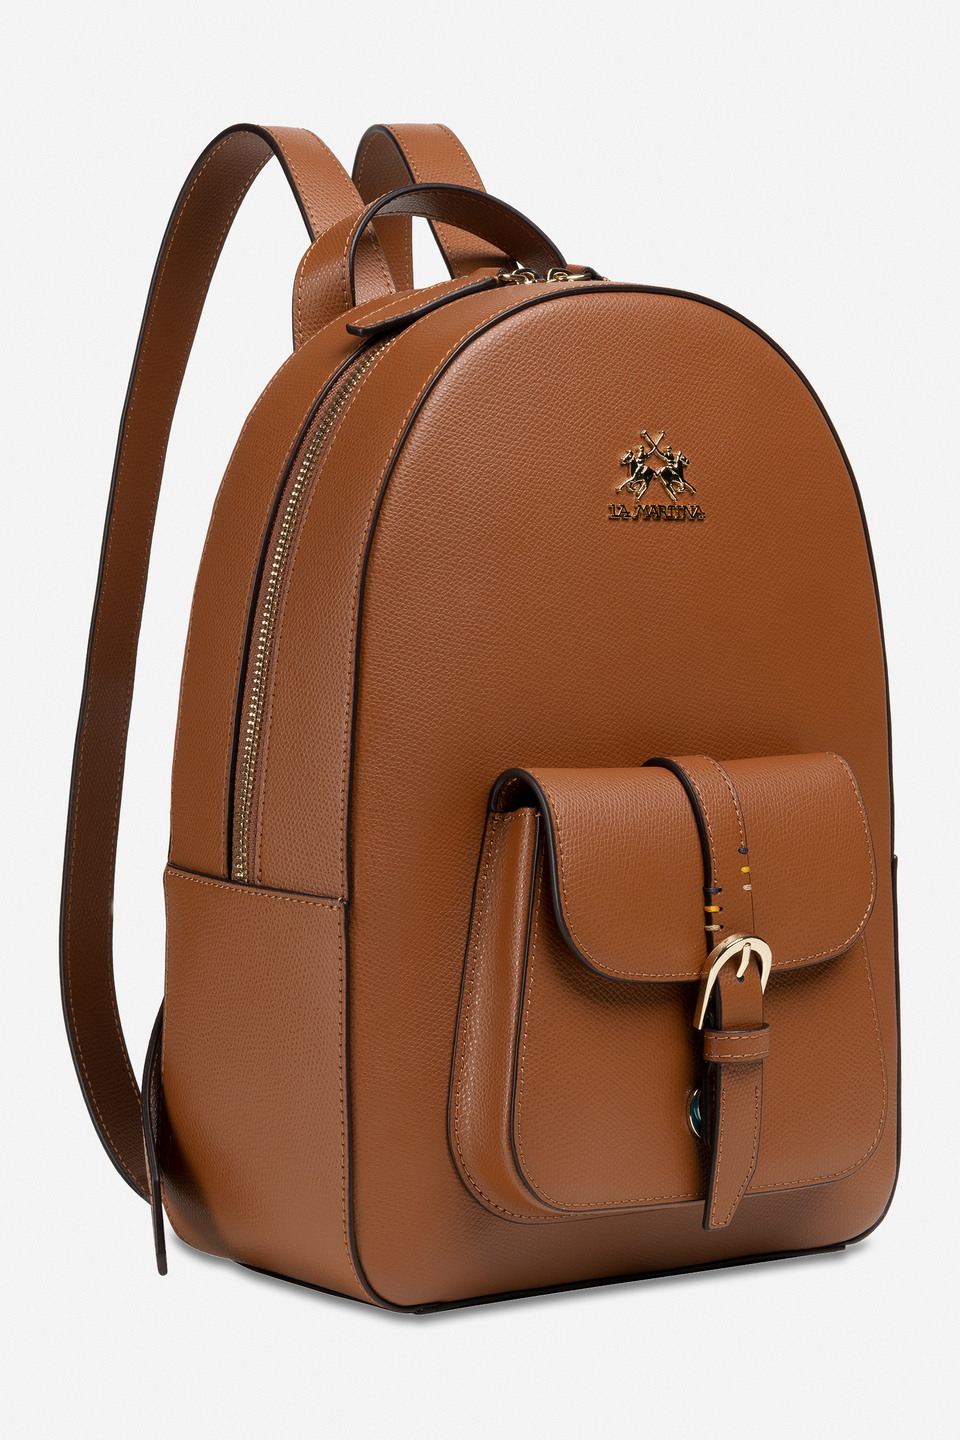 Women's leather rucksack | La Martina - Official Online Shop